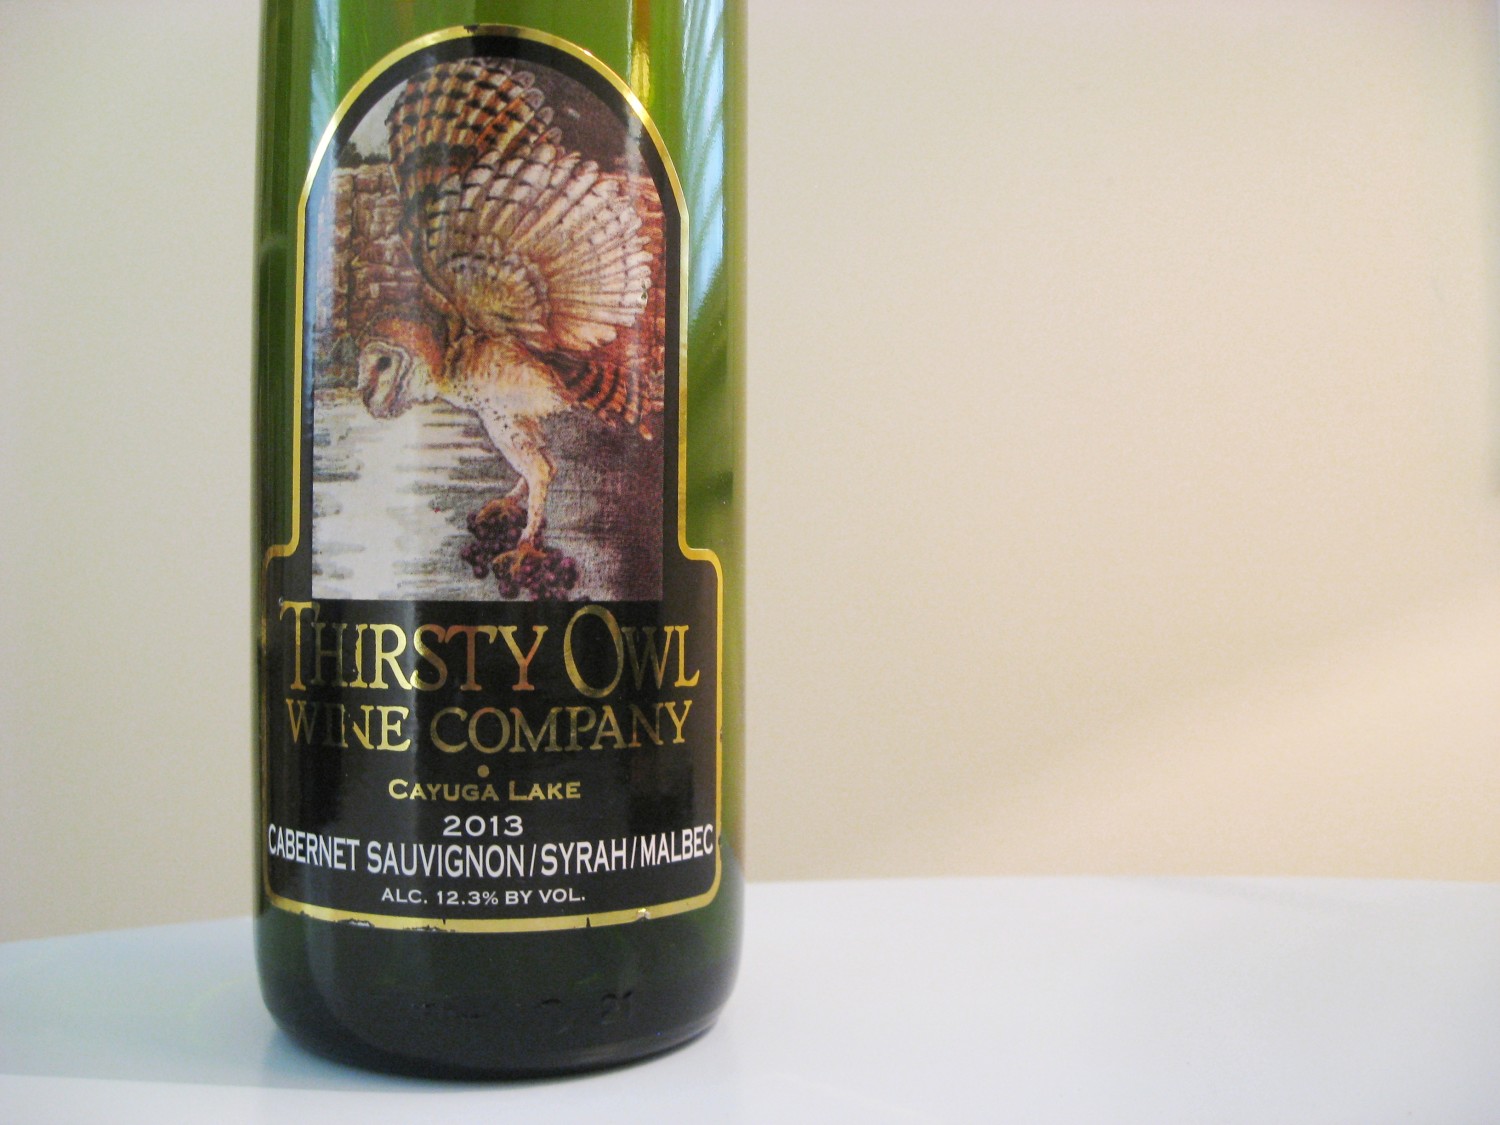 Thirsty Owl Wine Company, Cabernet Sauvignon-Syrah-Malbec 2013, Cayuga Lake, New York, Wine Casual